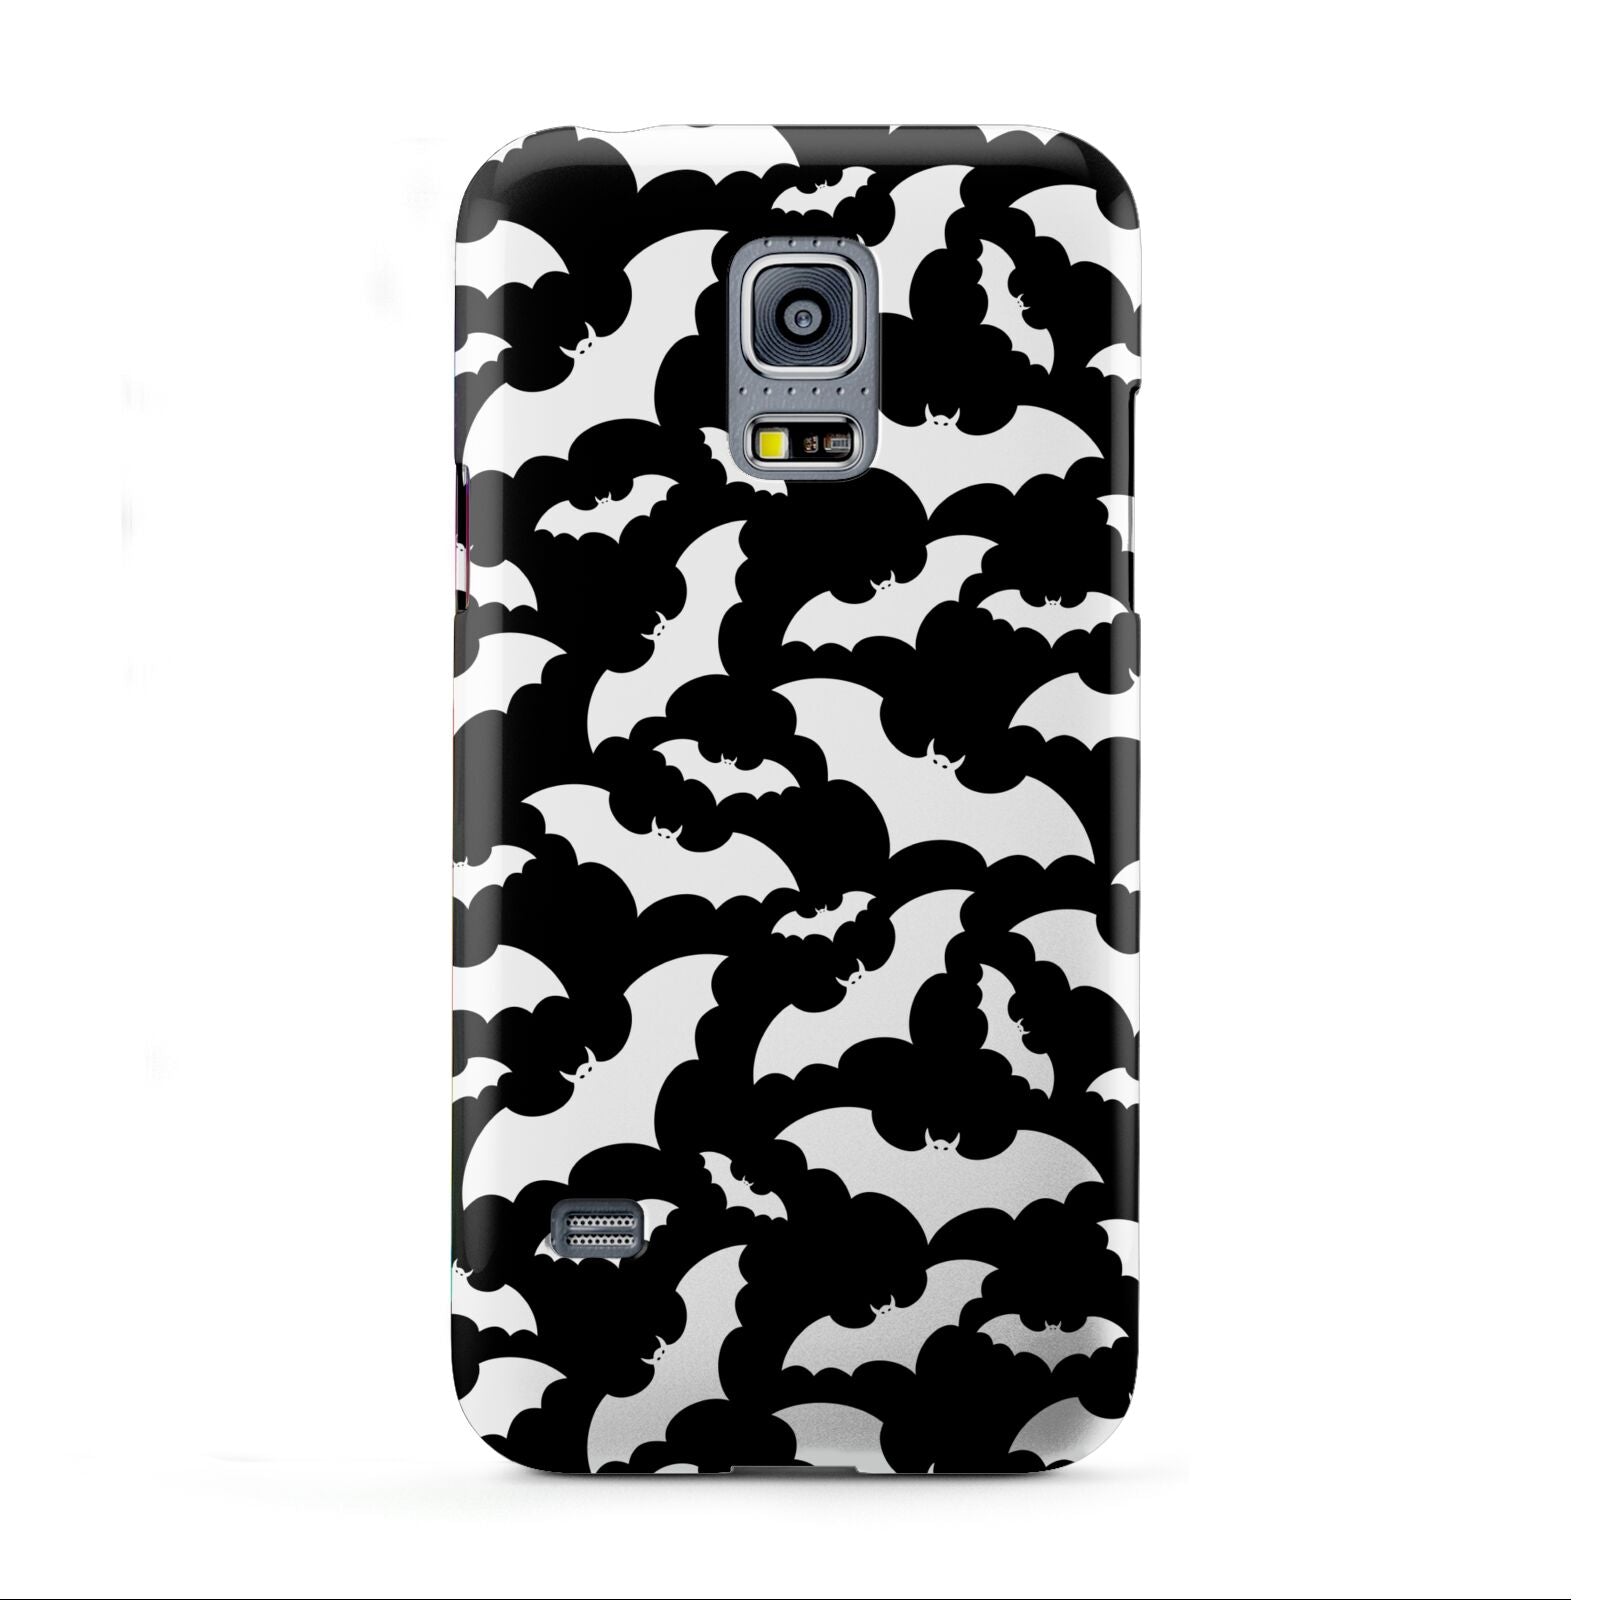 Black and White Bats Samsung Galaxy S5 Mini Case